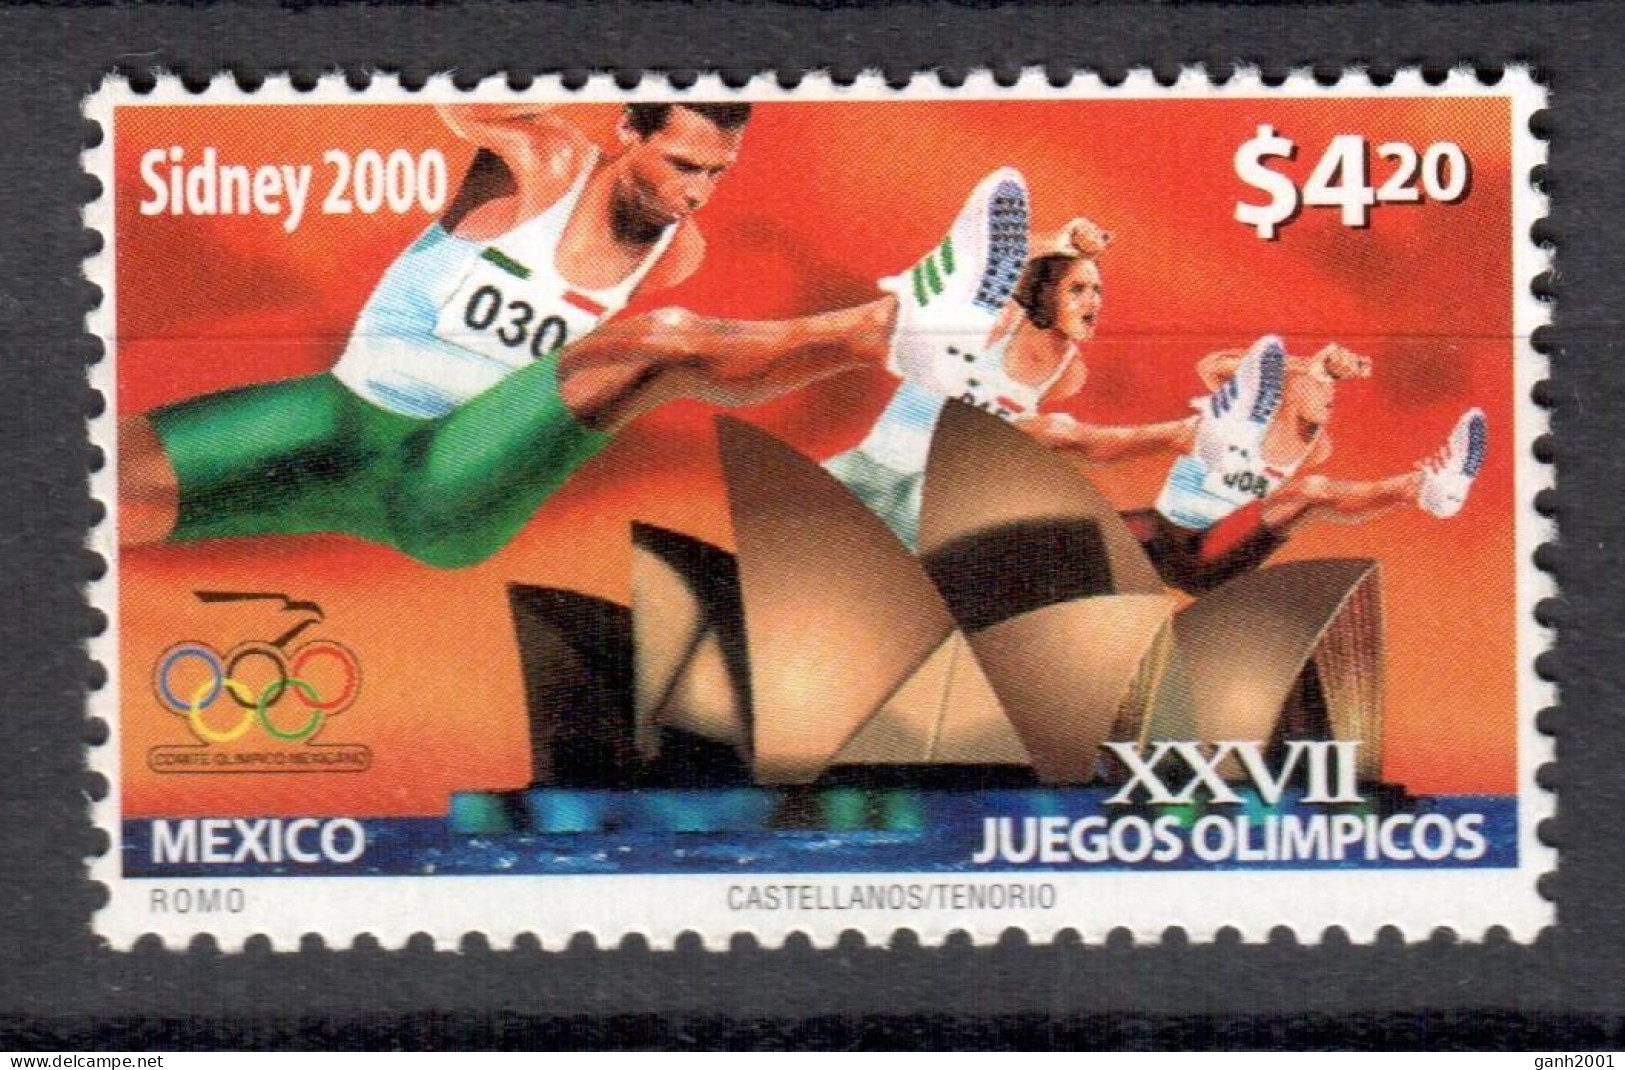 Mexico 2000 / Olympic Games Sydney 2000 MNH Juegos Olímpicos Sidney Olympische Spiele / Cu21322  18-16 - Sommer 2000: Sydney